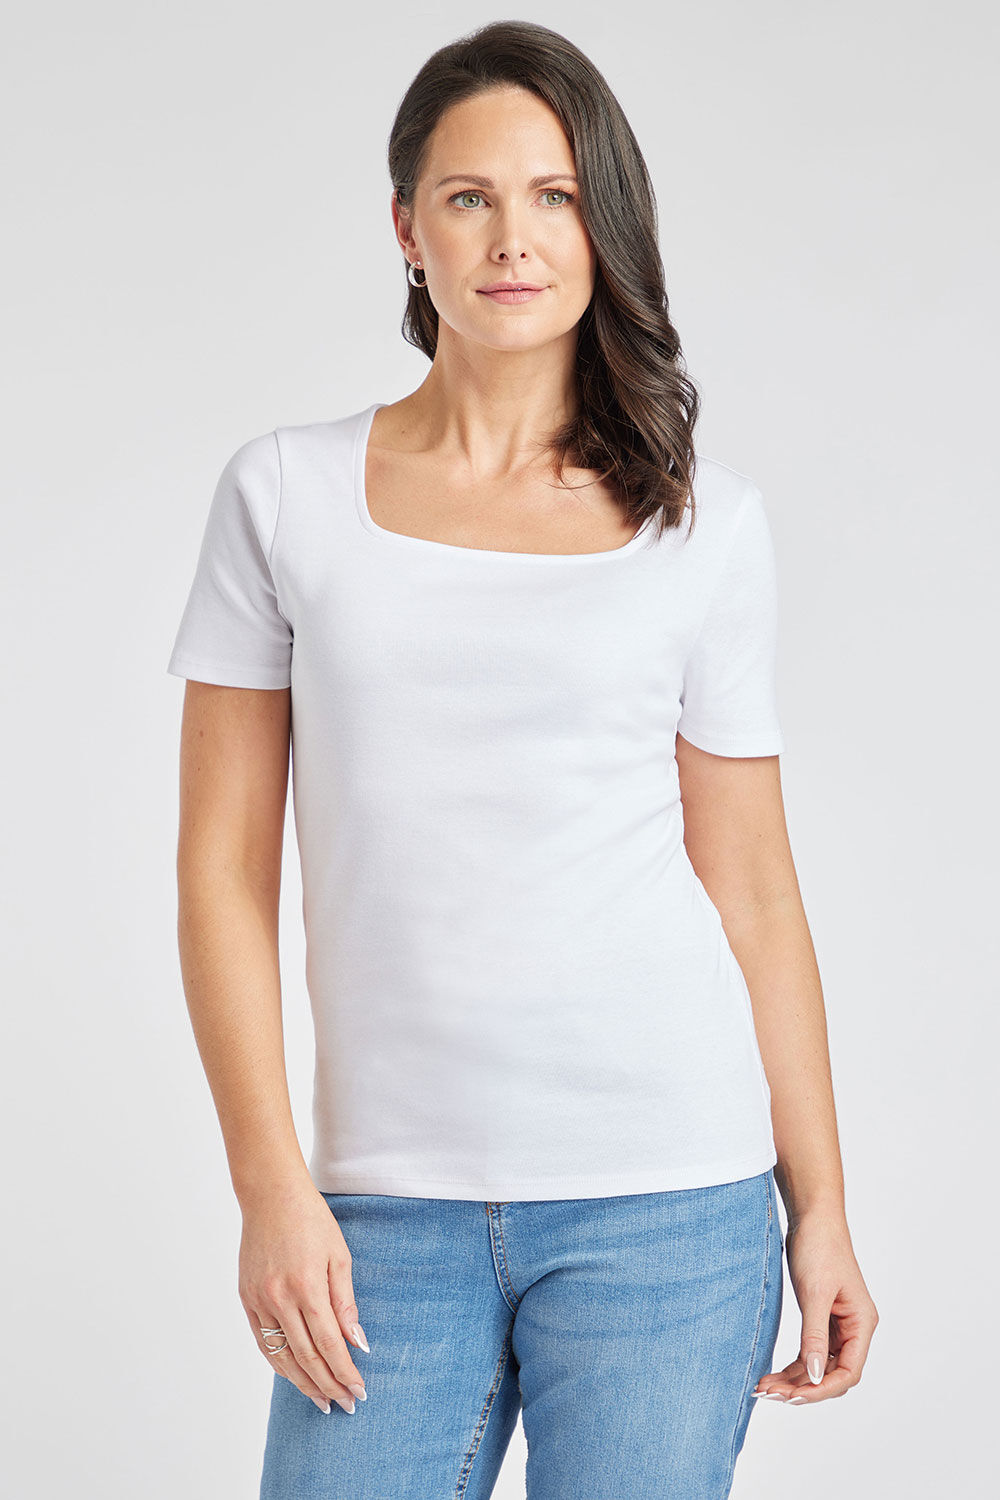 Bonmarche White Square Neck Plain T-Shirt, Size: 22